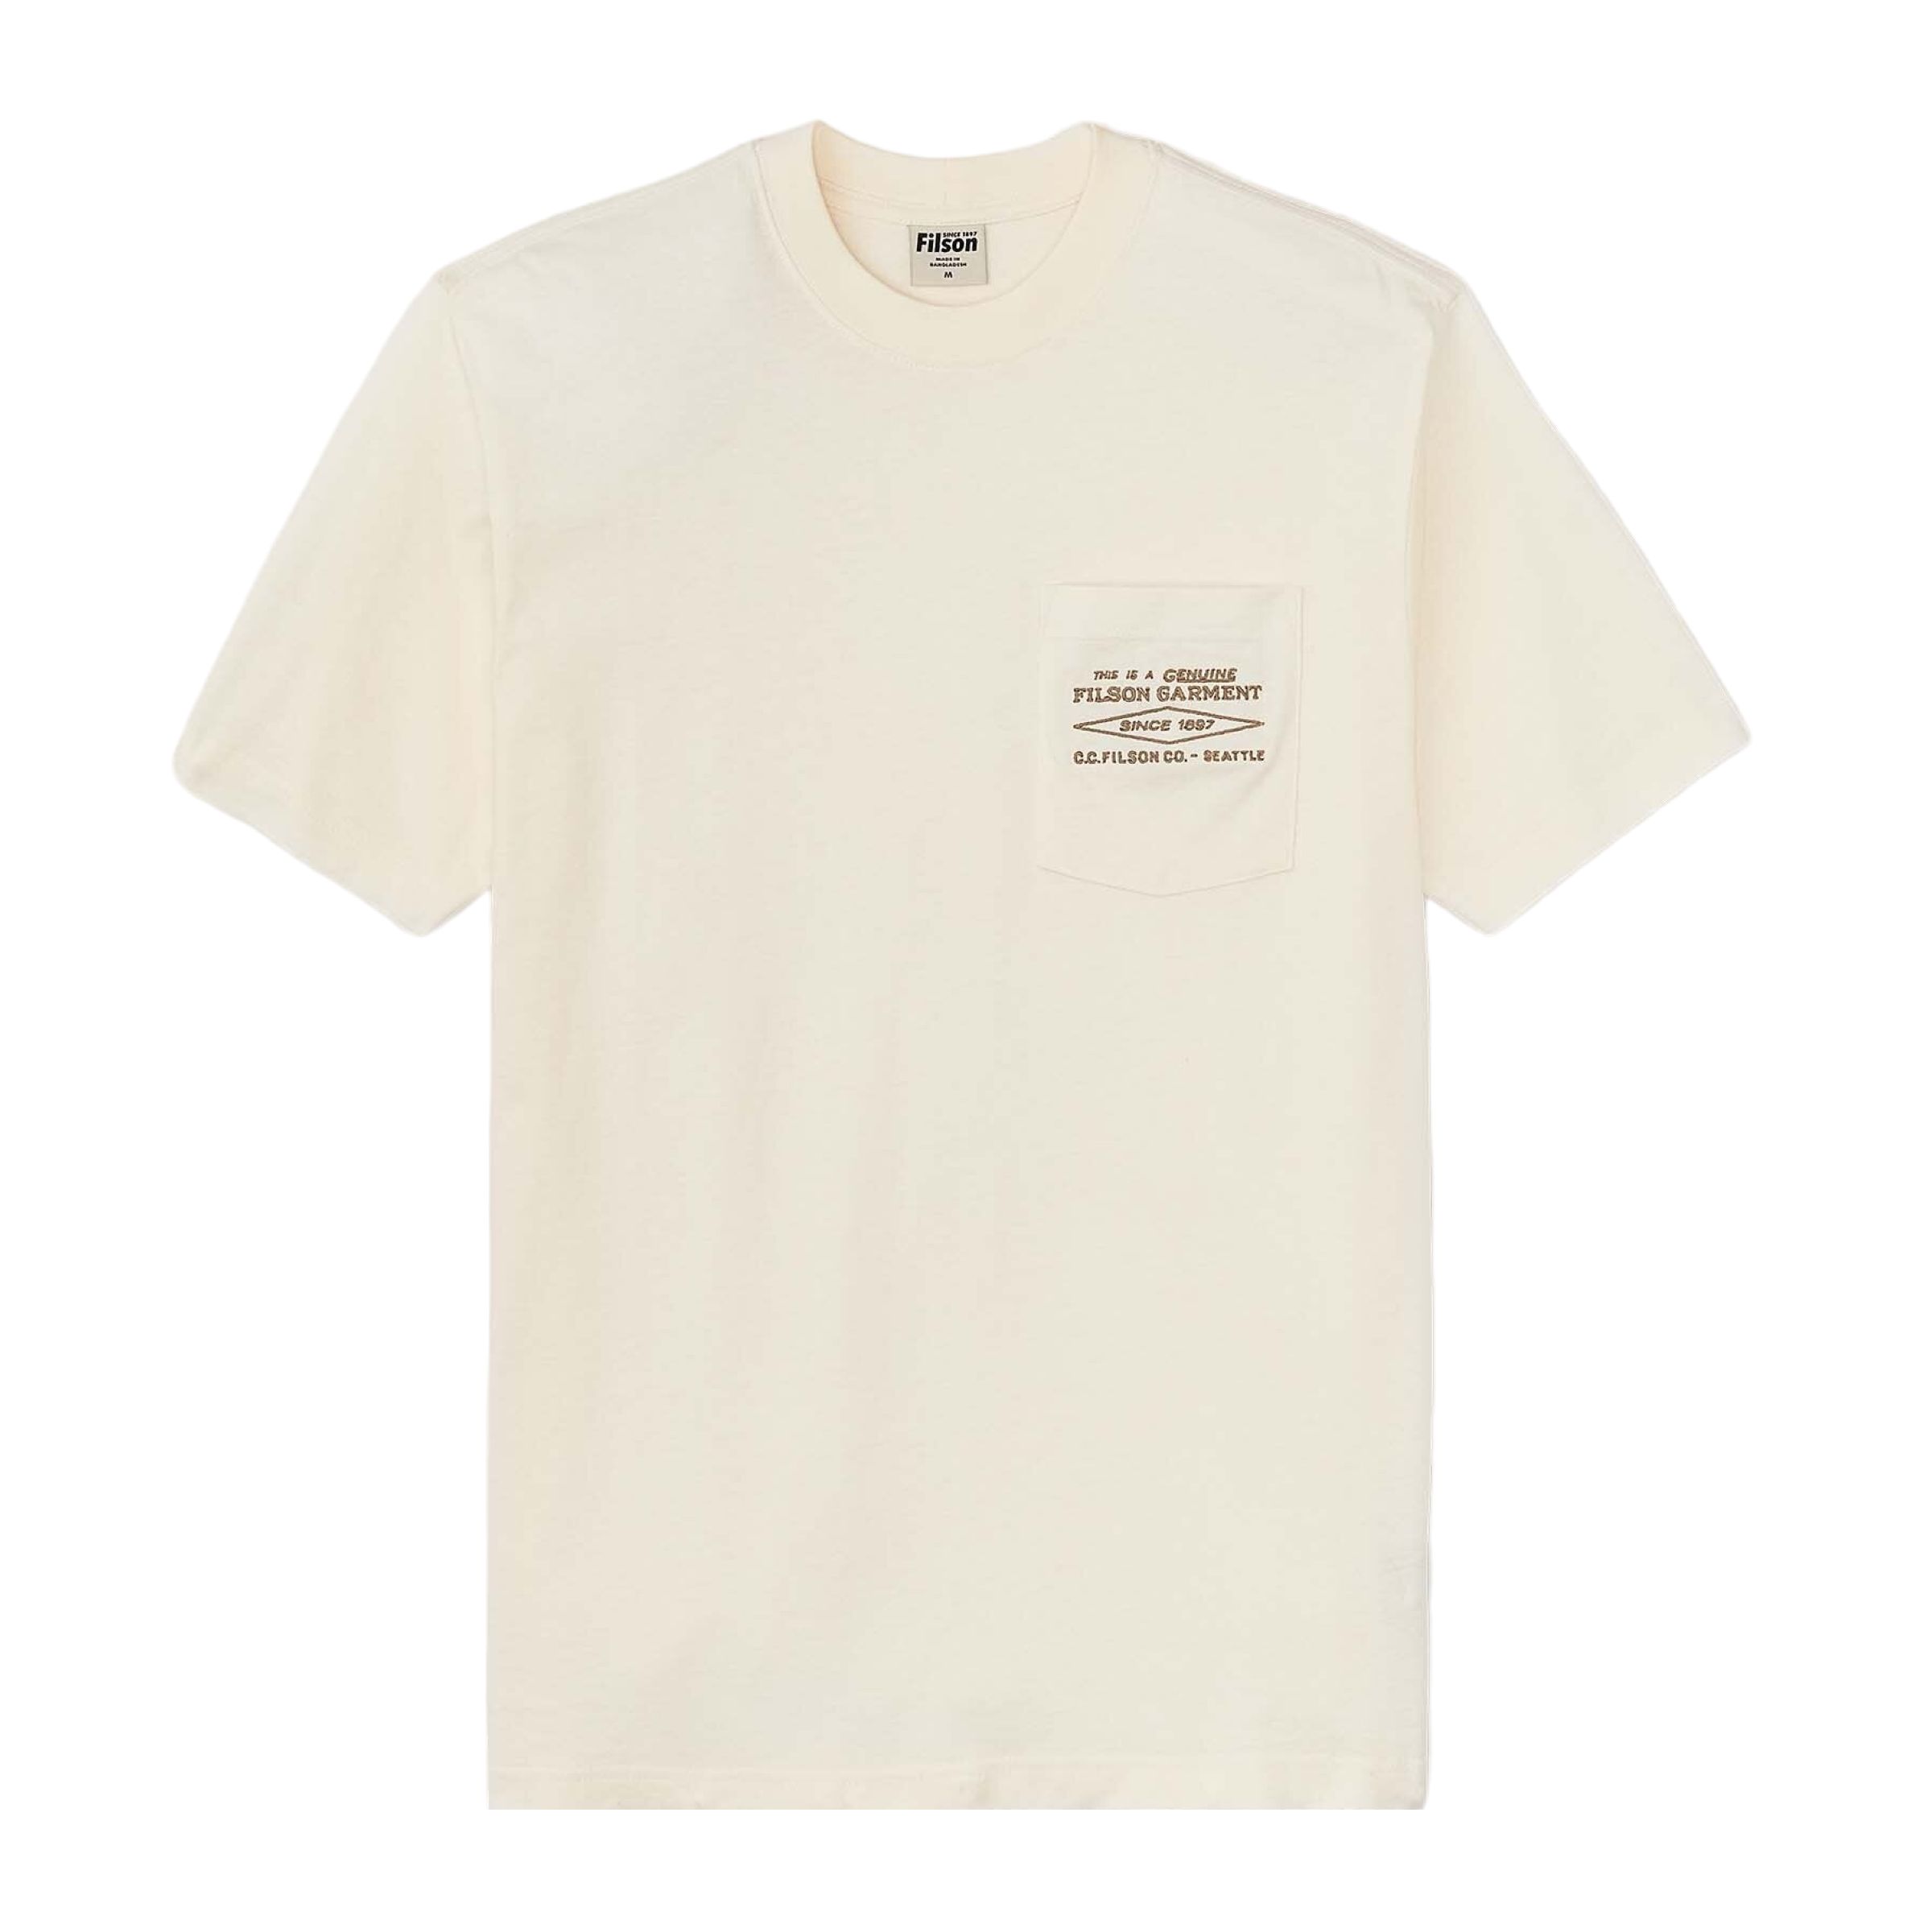 filson-t-shirt-embroidered-pocket-uomo-off-white-diamond